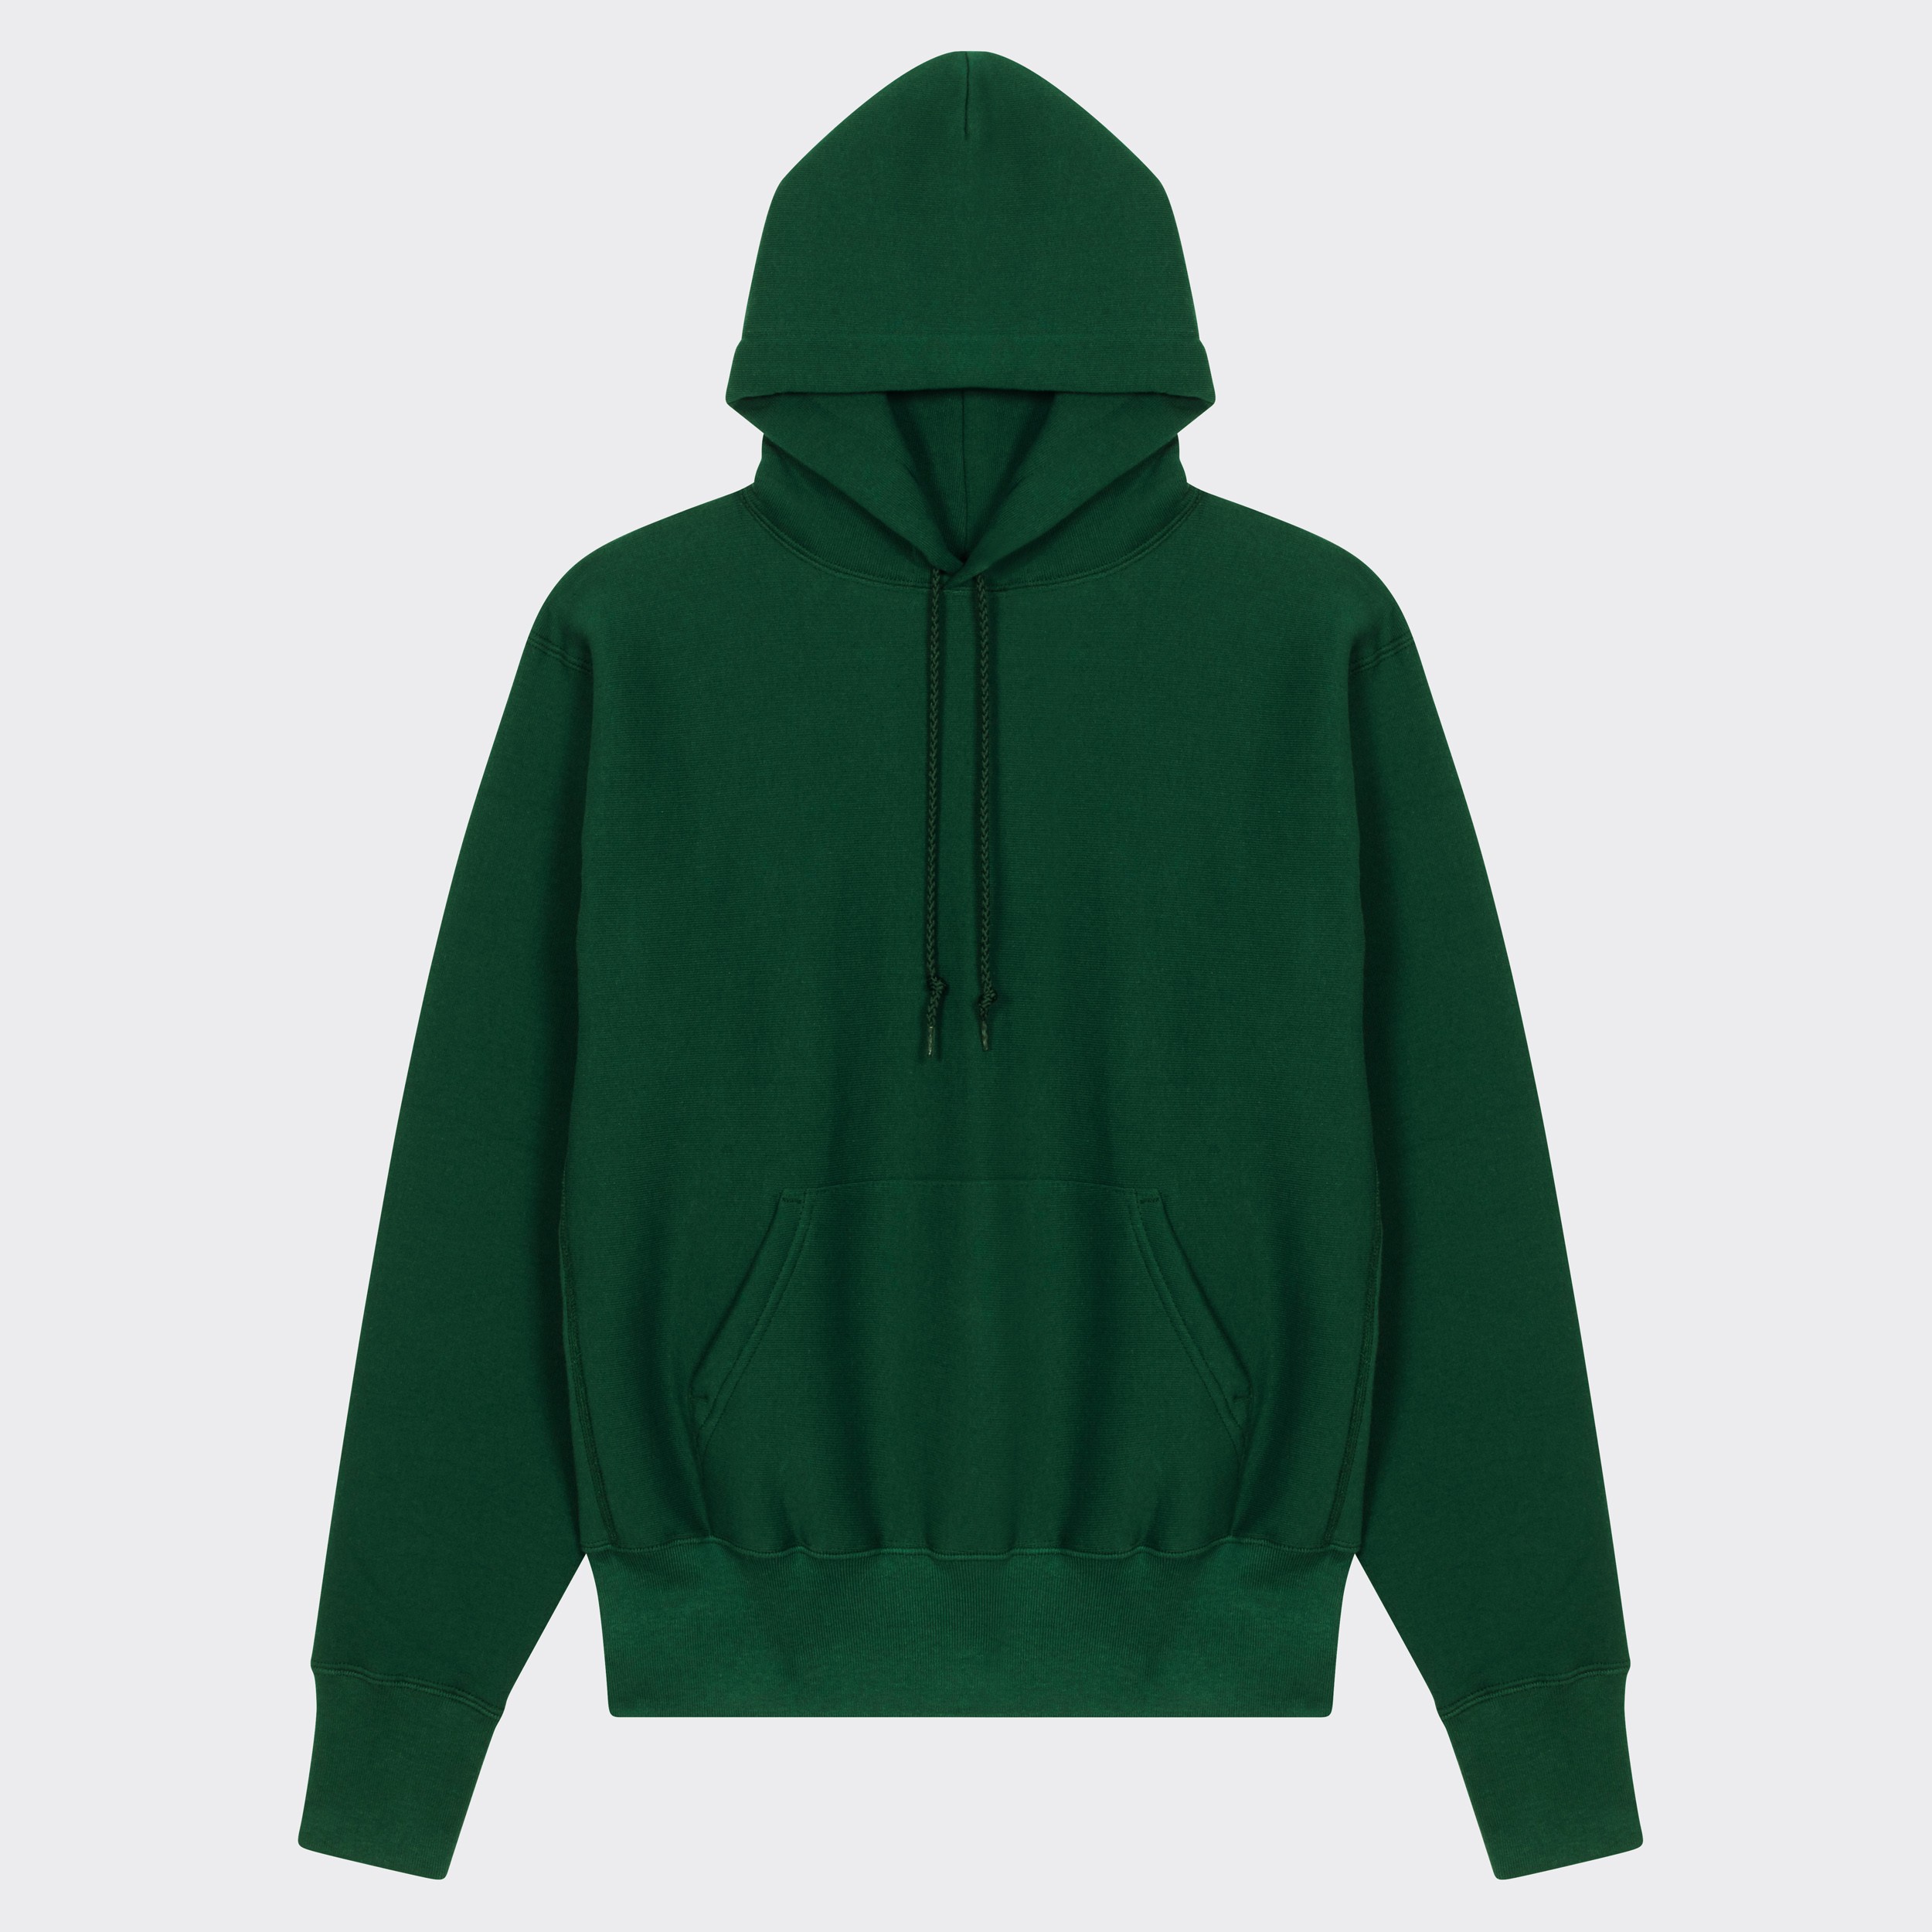 Camber USA : Hooded Sweatshirt : Green